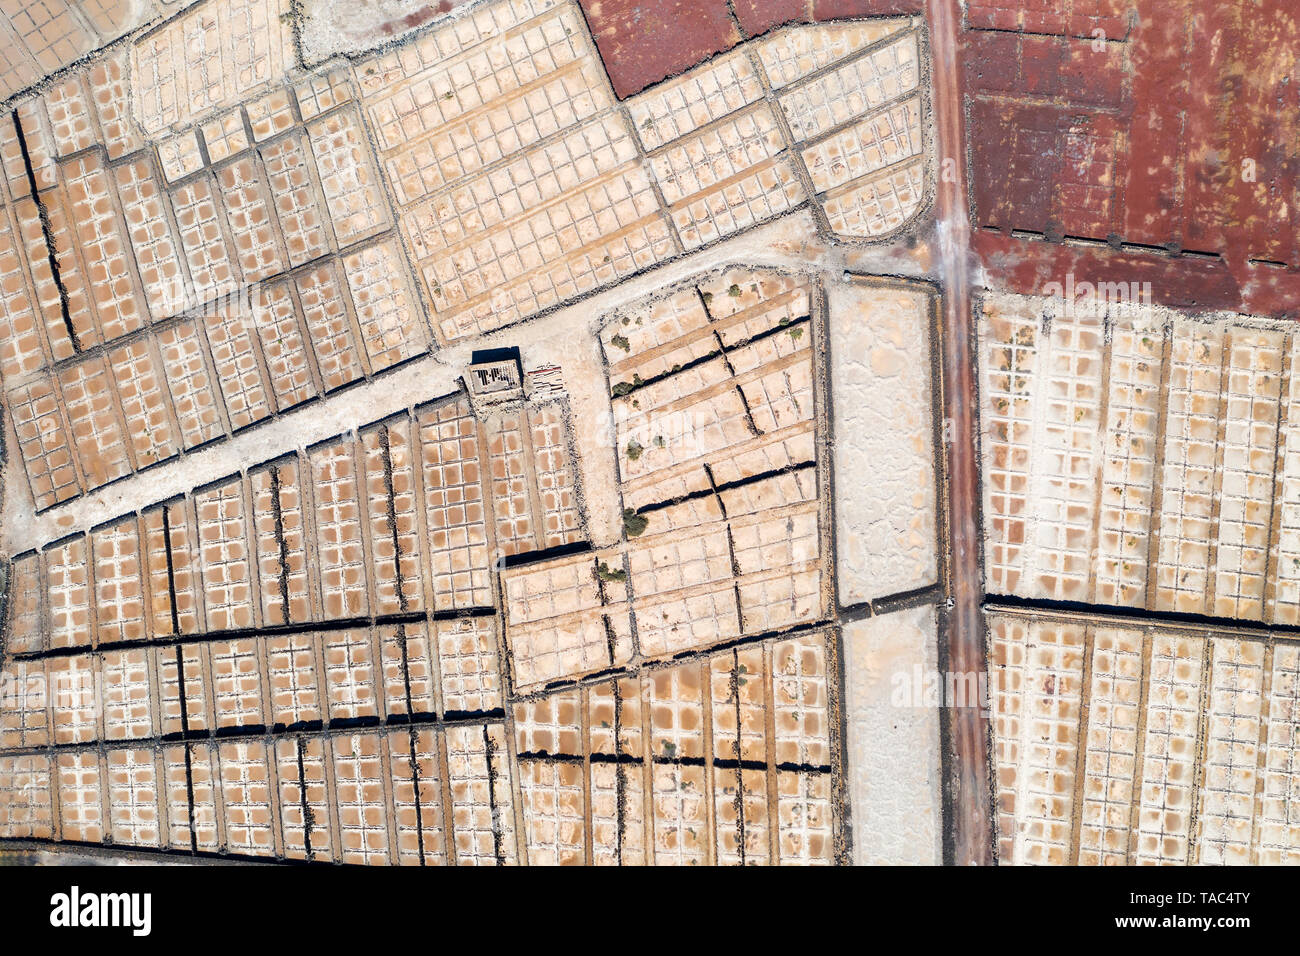 Spagna Isole Canarie Lanzarote, Yaiza, sale i campi di data mining, vista aerea Foto Stock